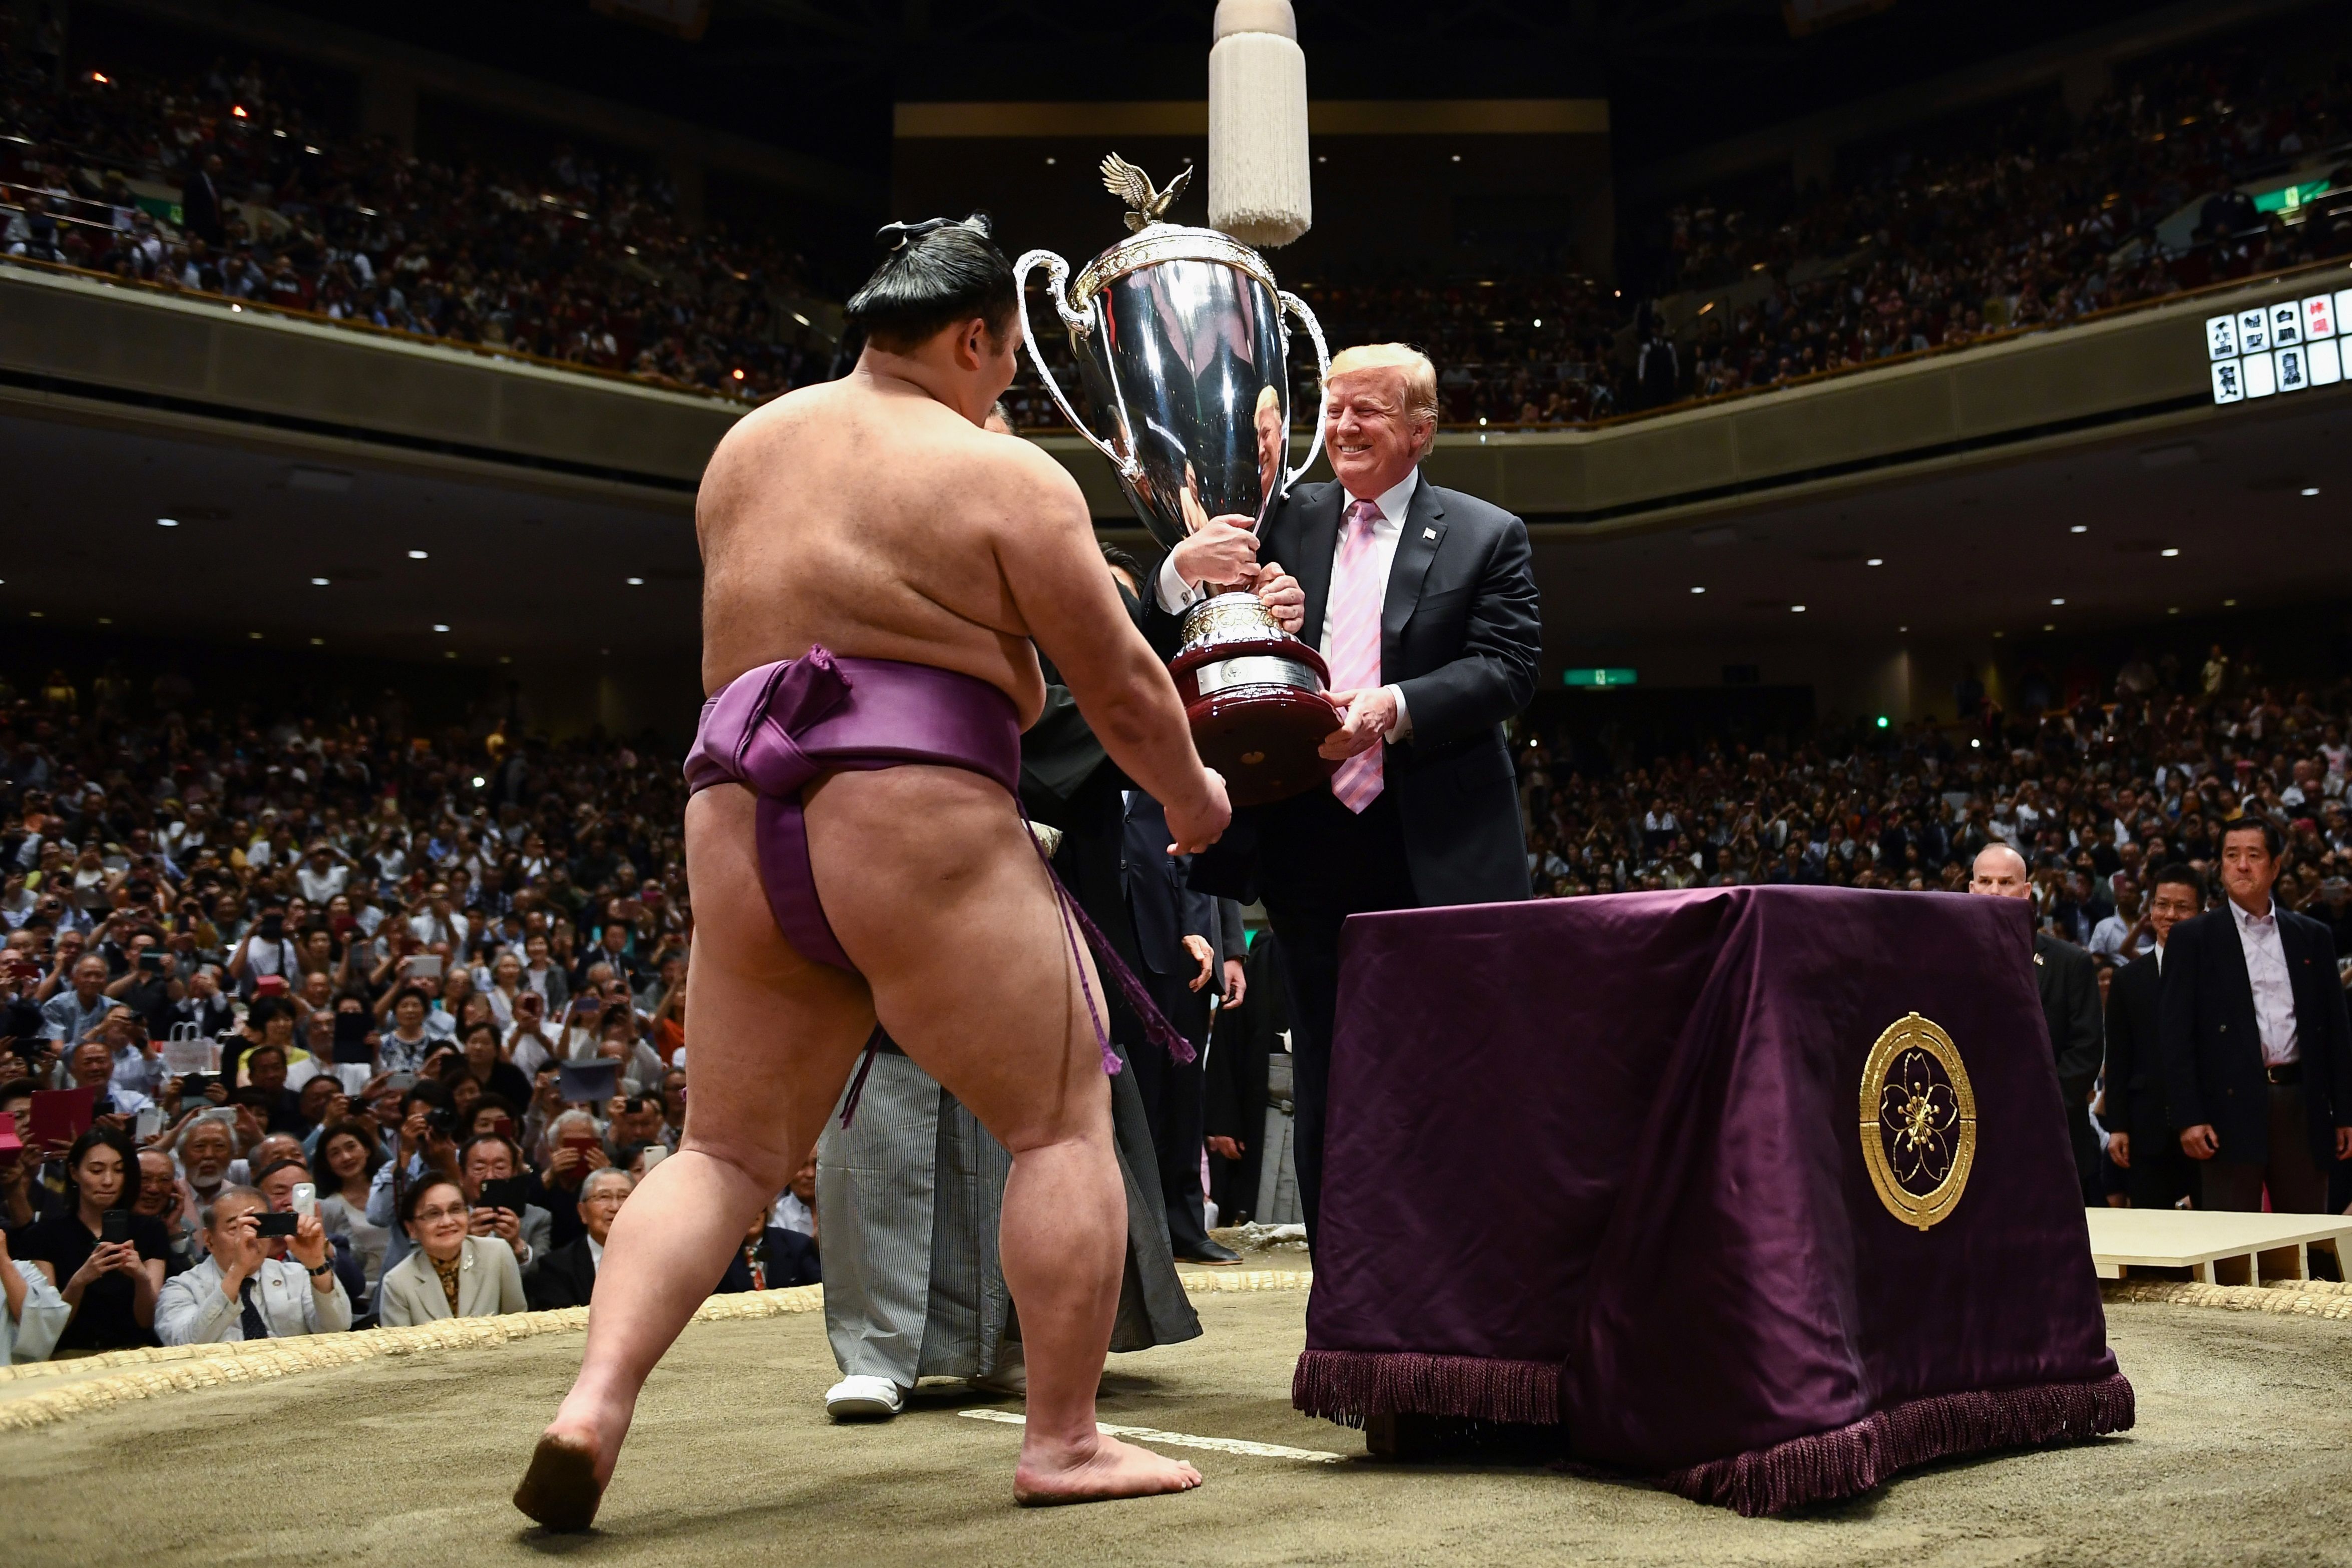 US President Donald Trump presents the President's Cup to sumo wrestler Asanoyama during the Summer Grand Sumo Tournament at Ryogoku Kokugikan Stadium in Tokyo on May 26, 2019.